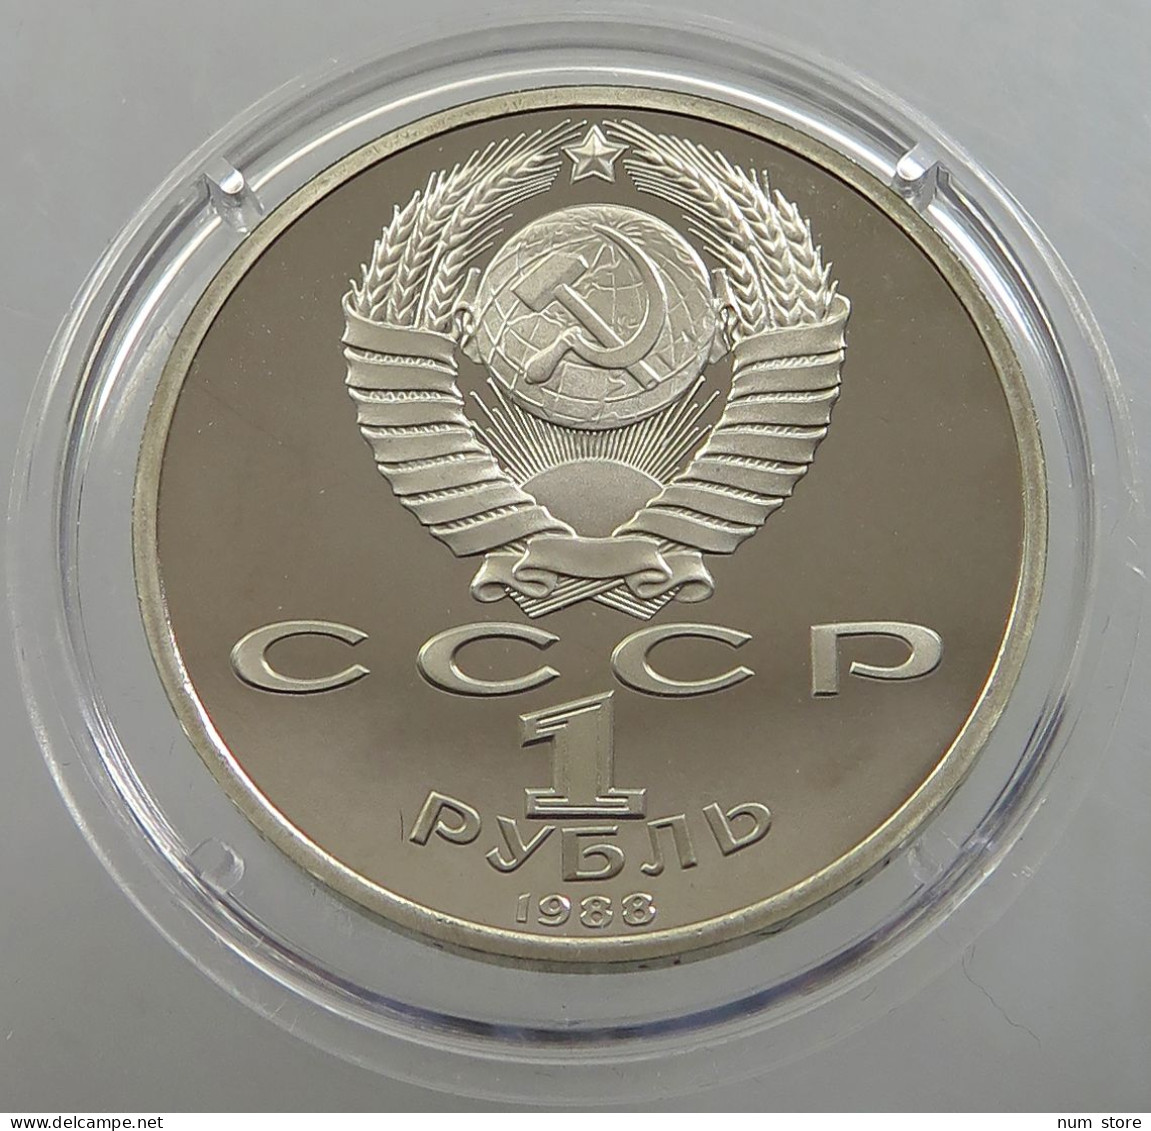 RUSSIA USSR 1 ROUBLE 1988 GORKI PROOF #sm14 0503 - Russia